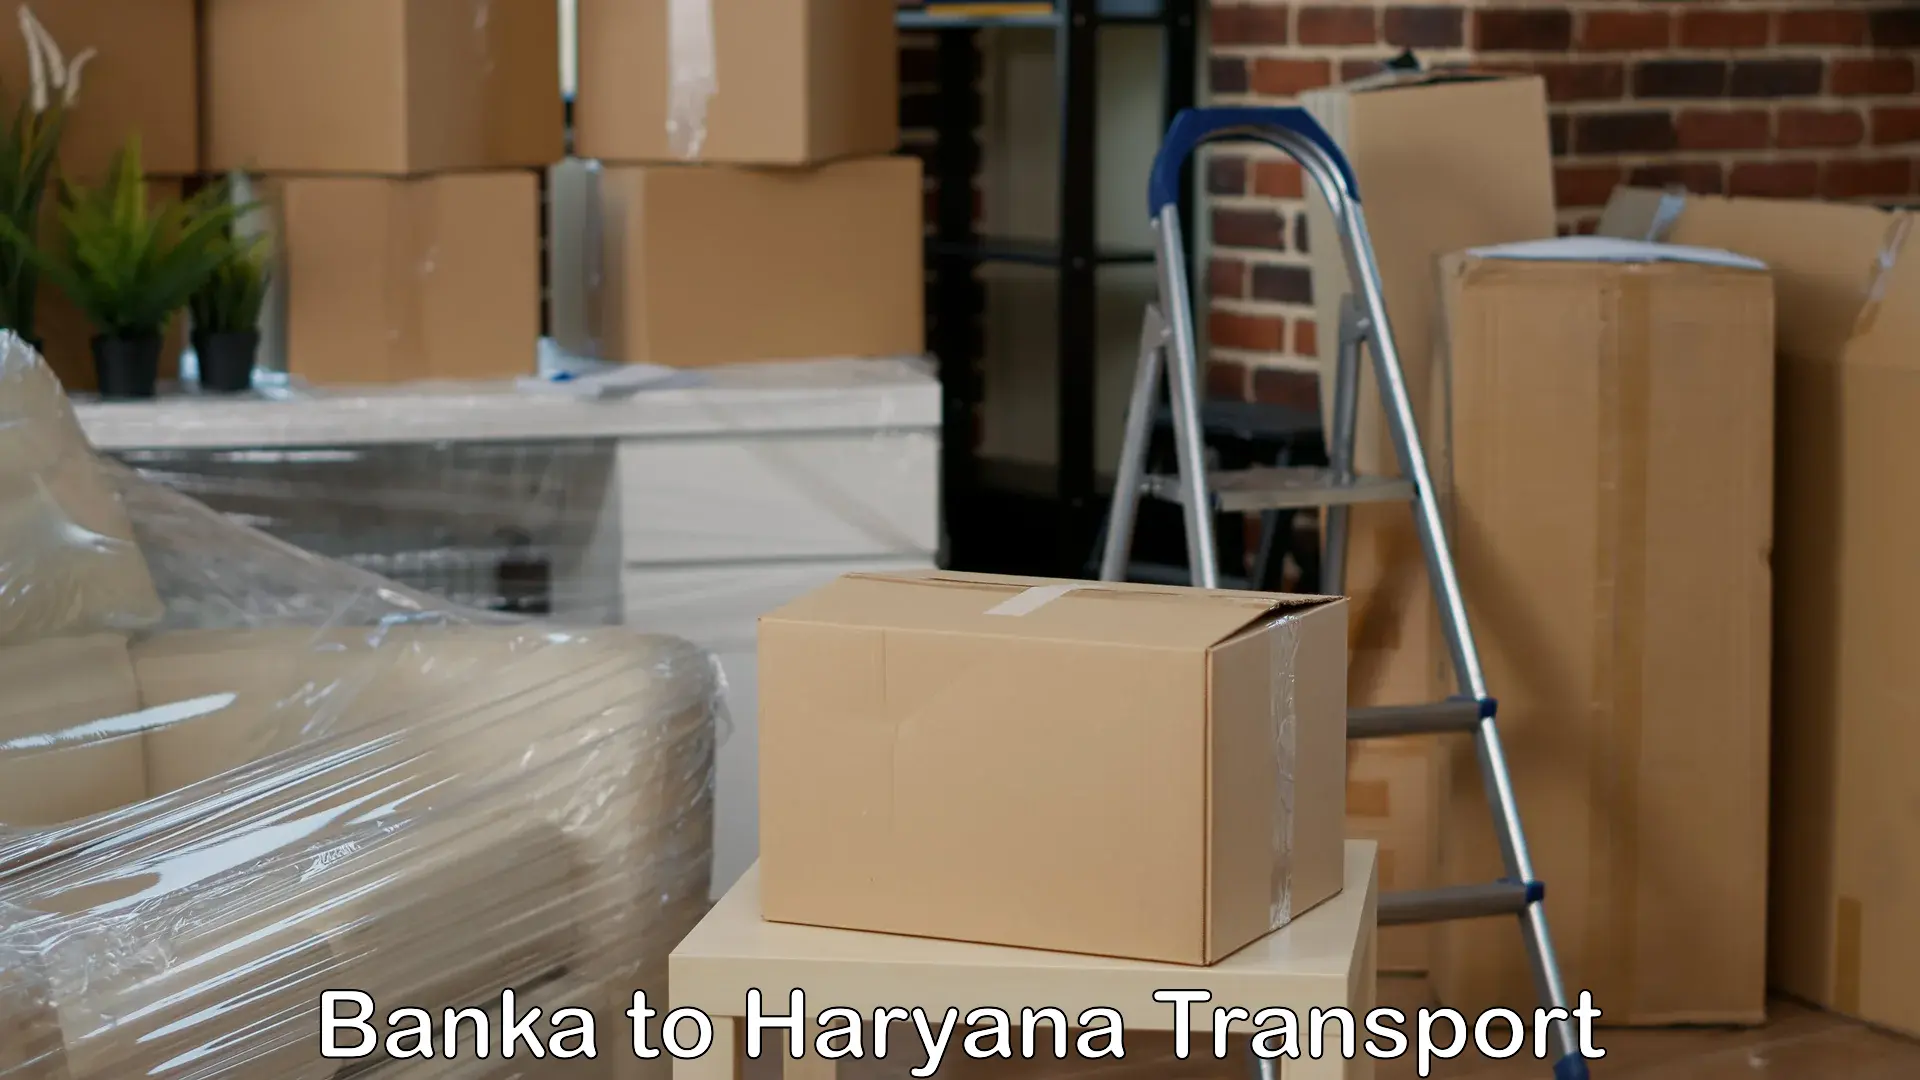 Truck transport companies in India Banka to Panchkula